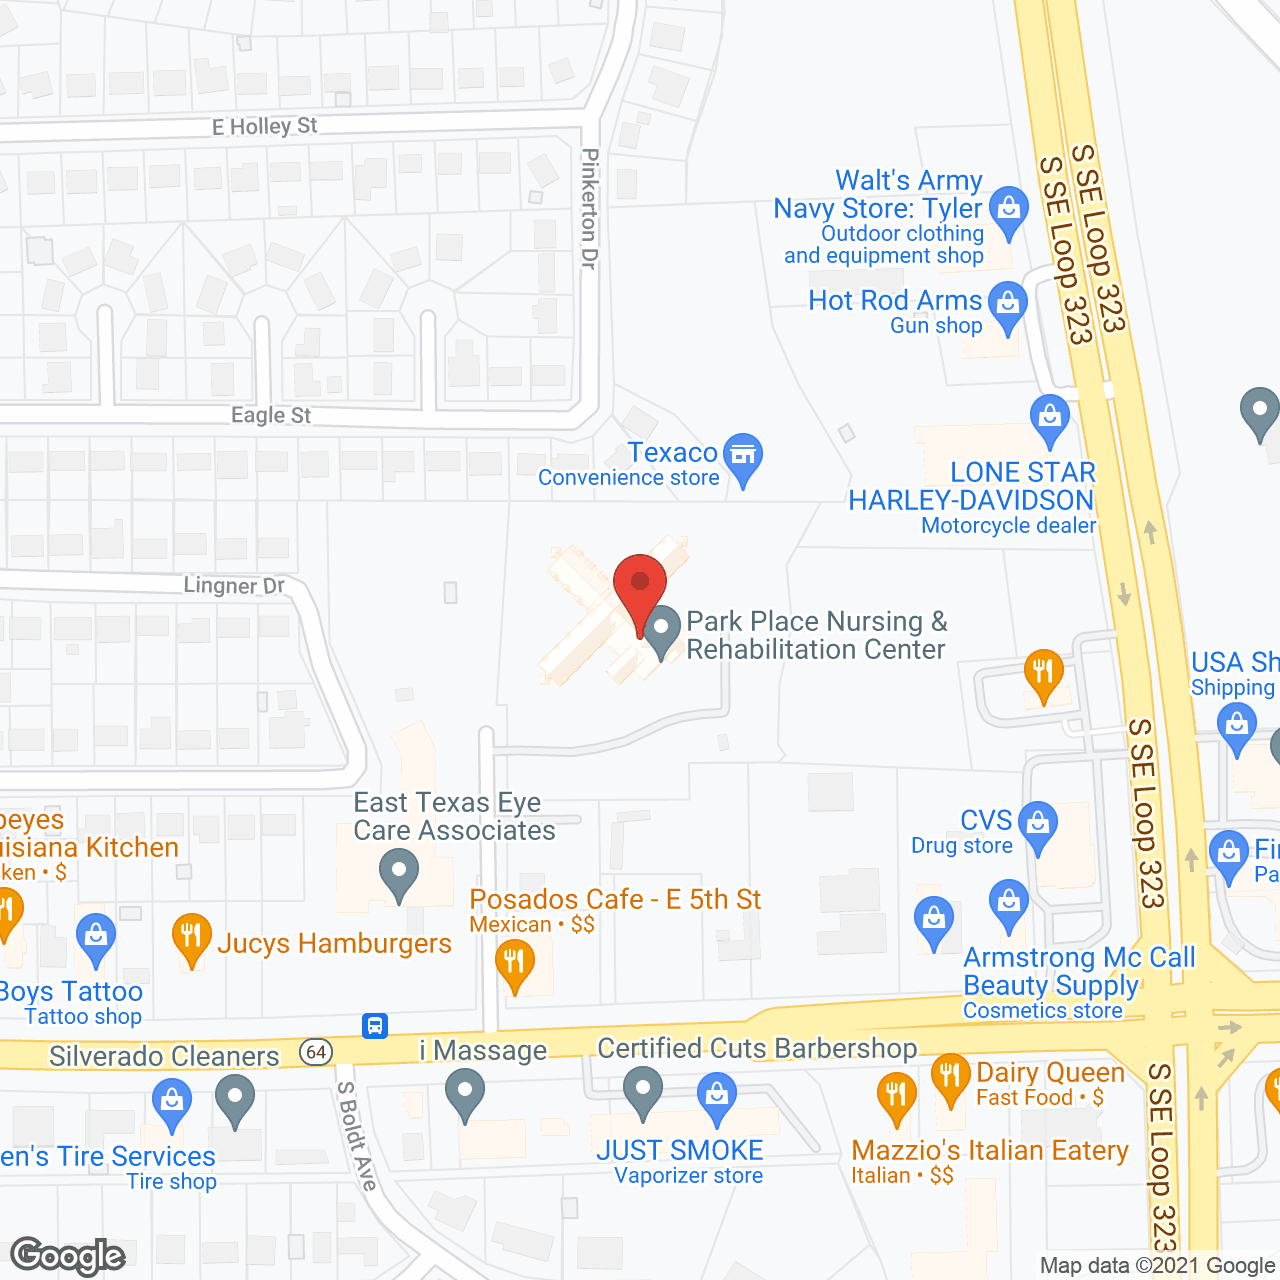 Park Place Nursing & Rehab Ctr in google map